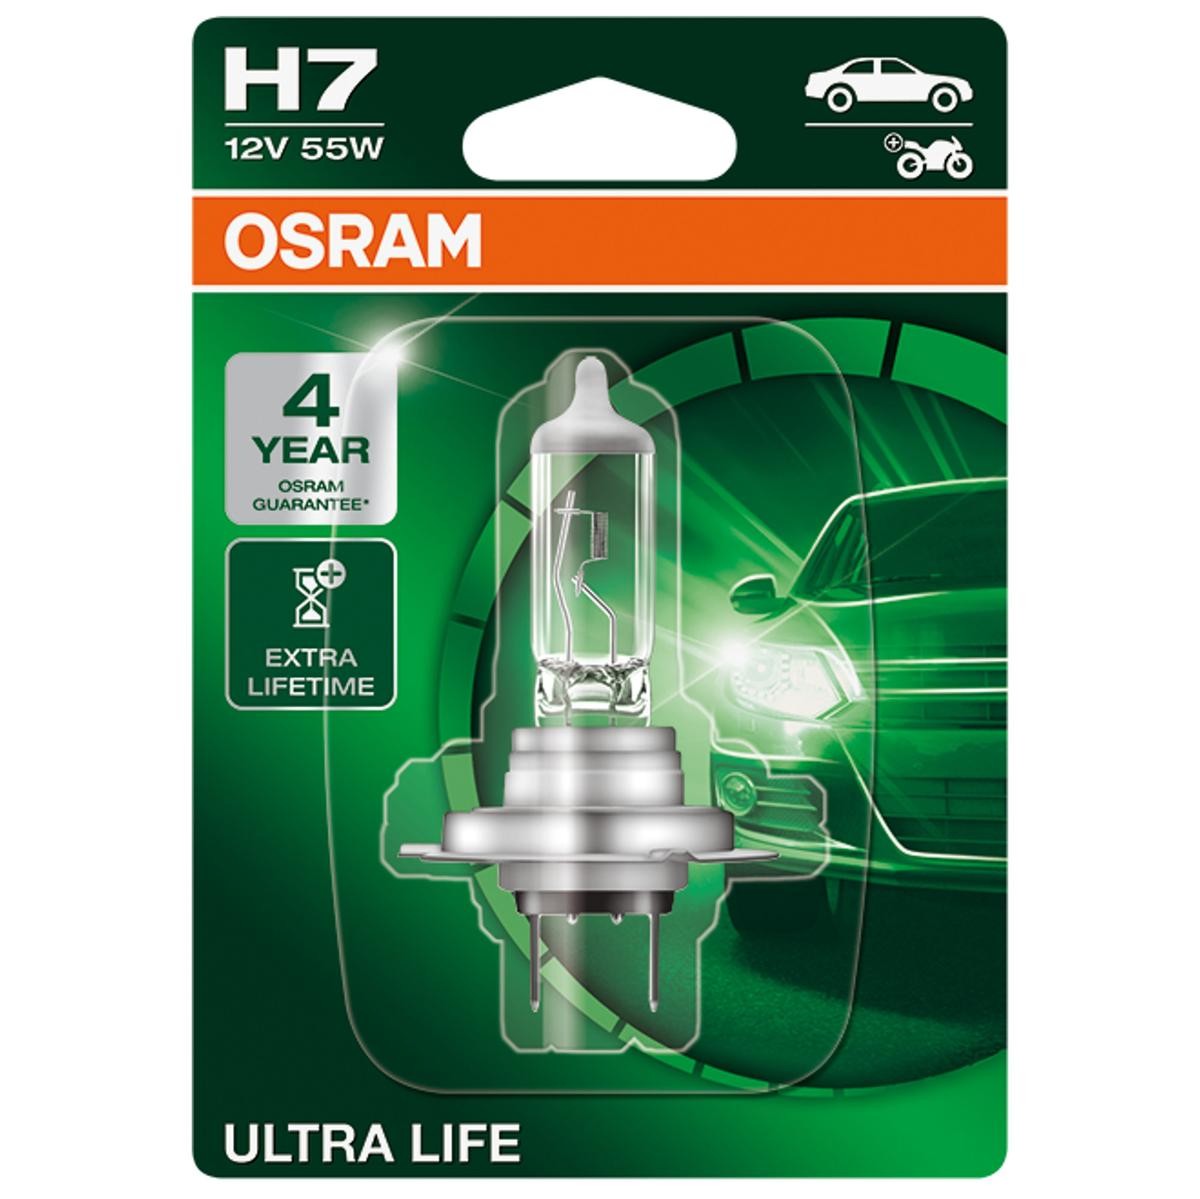 LAMPARA OSRAM H7 12V 55W – ELECTRO SPACE